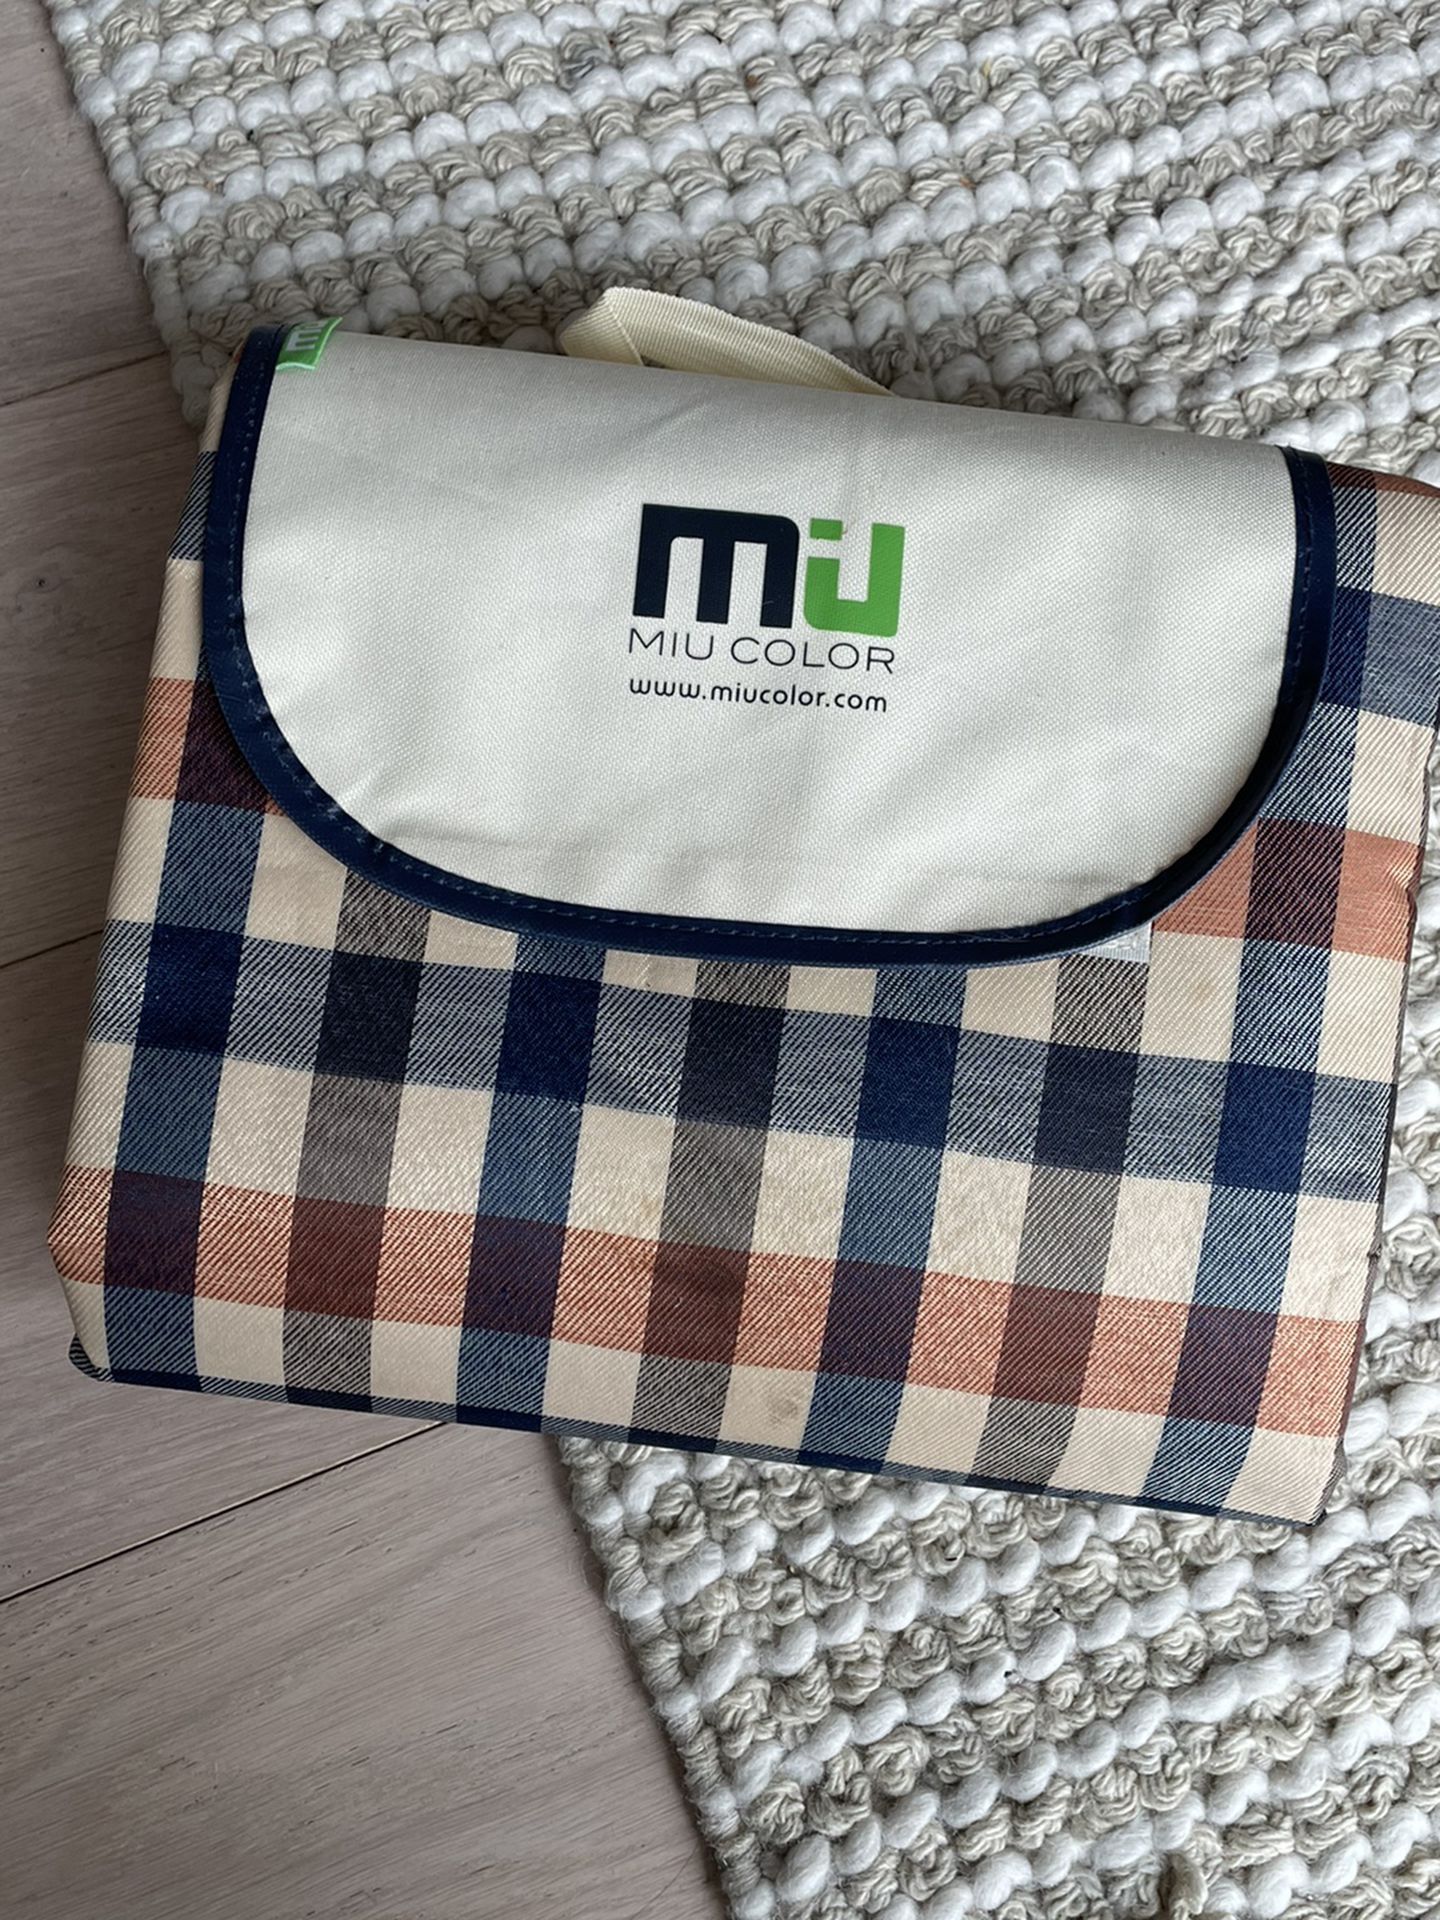 Miu Outdoor Picnic Blanket (Waterproof, Packable)